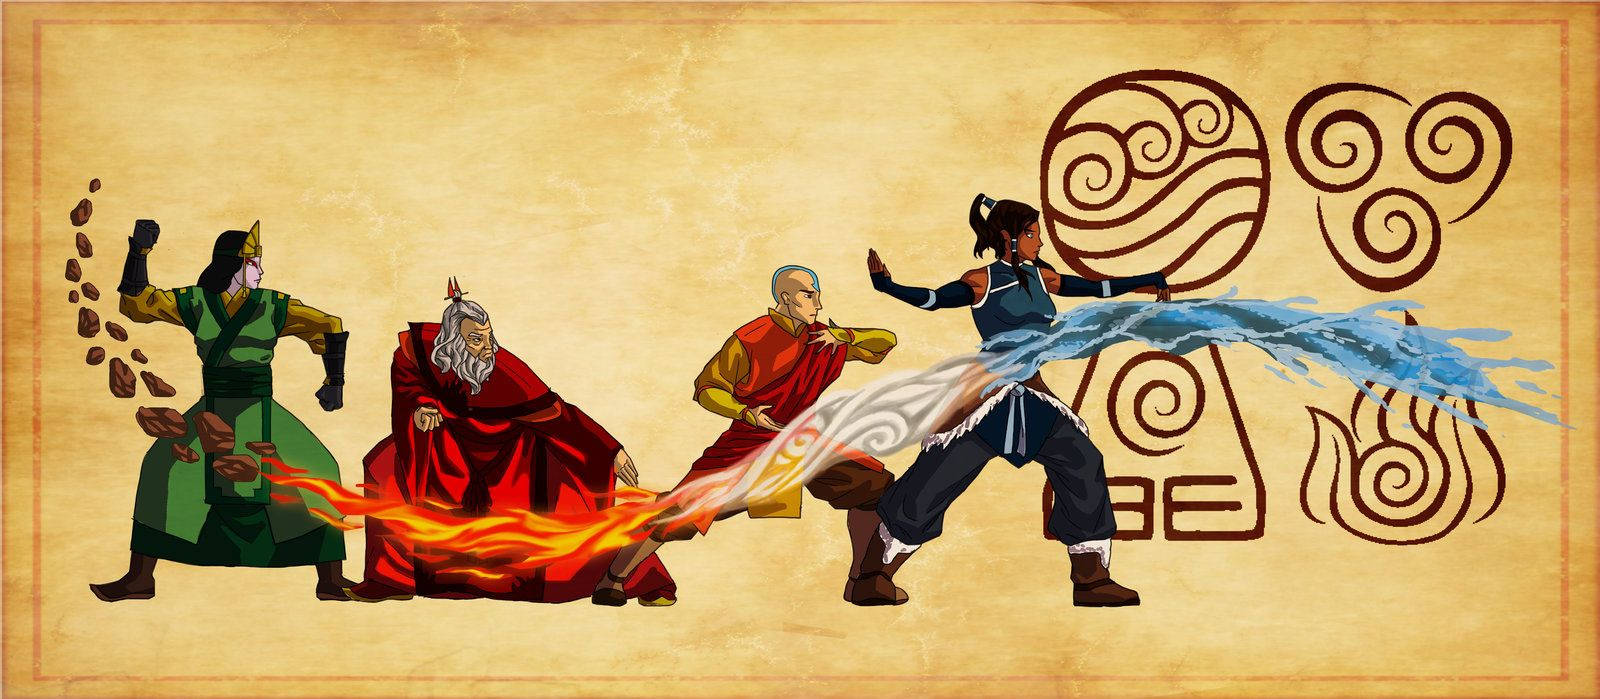 Avatar The Last Airbender Four Avatars Wallpaper